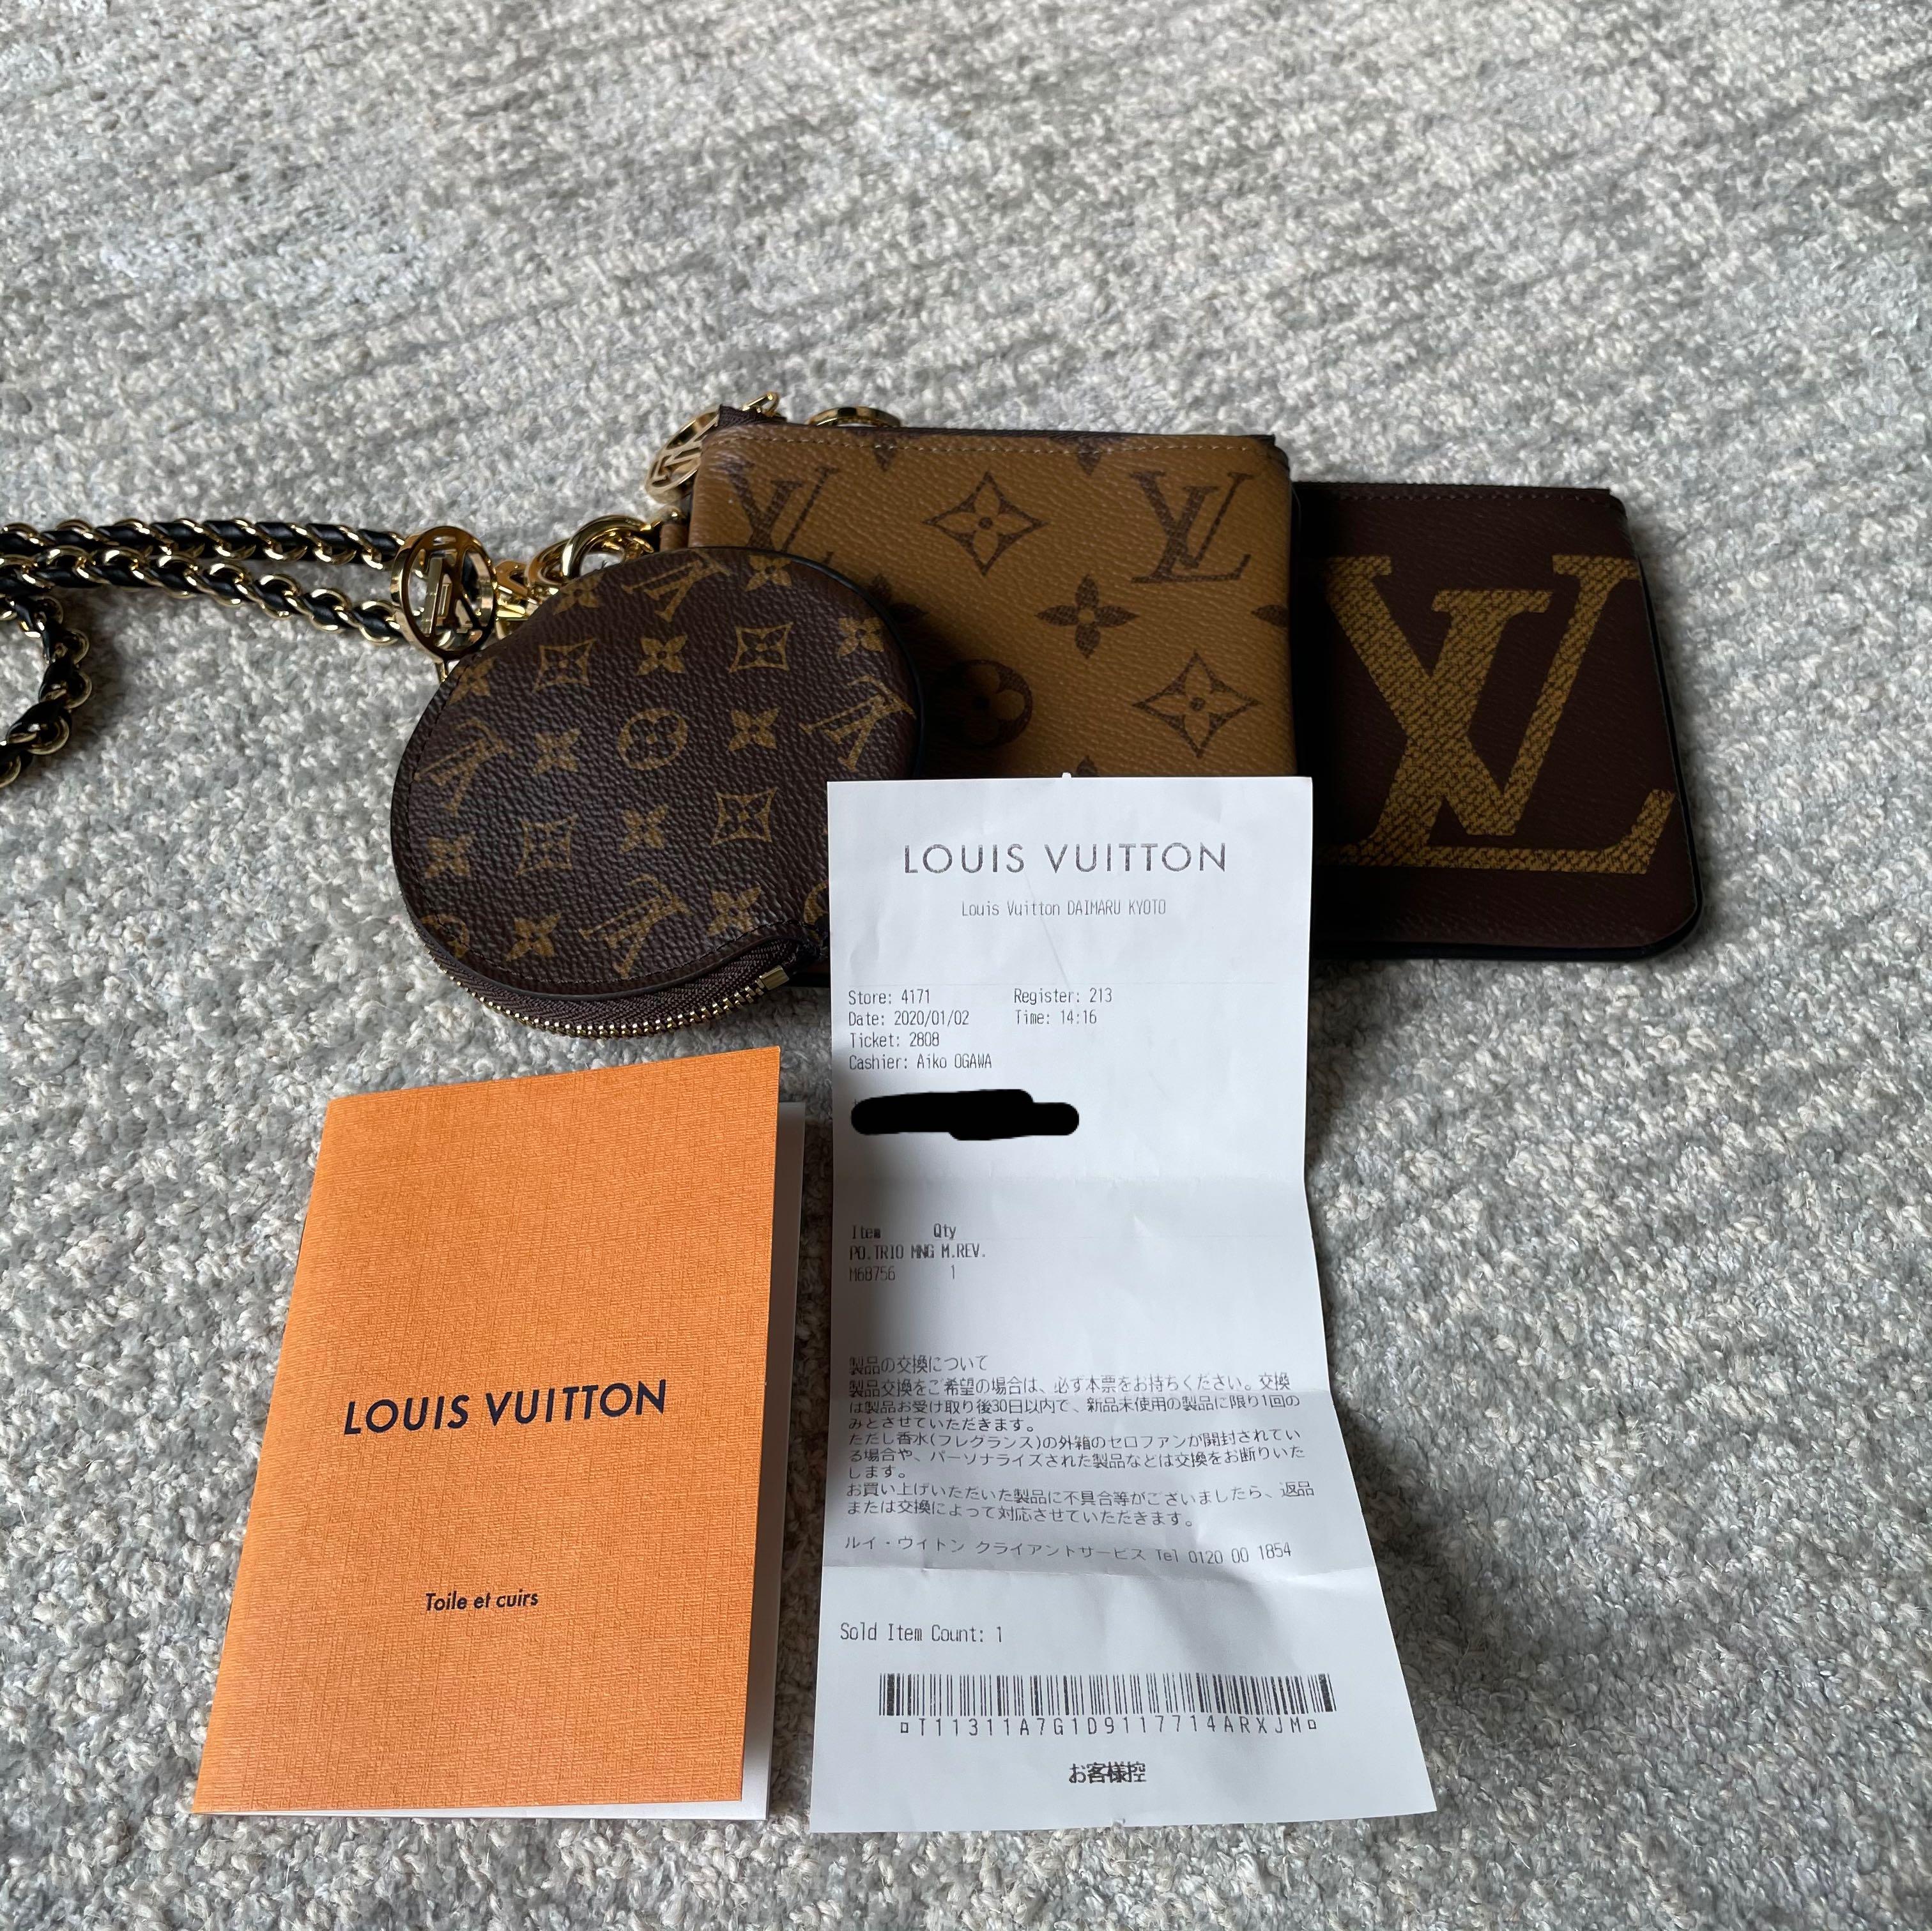 Louis Vuitton Trio Pouch w/ Tags